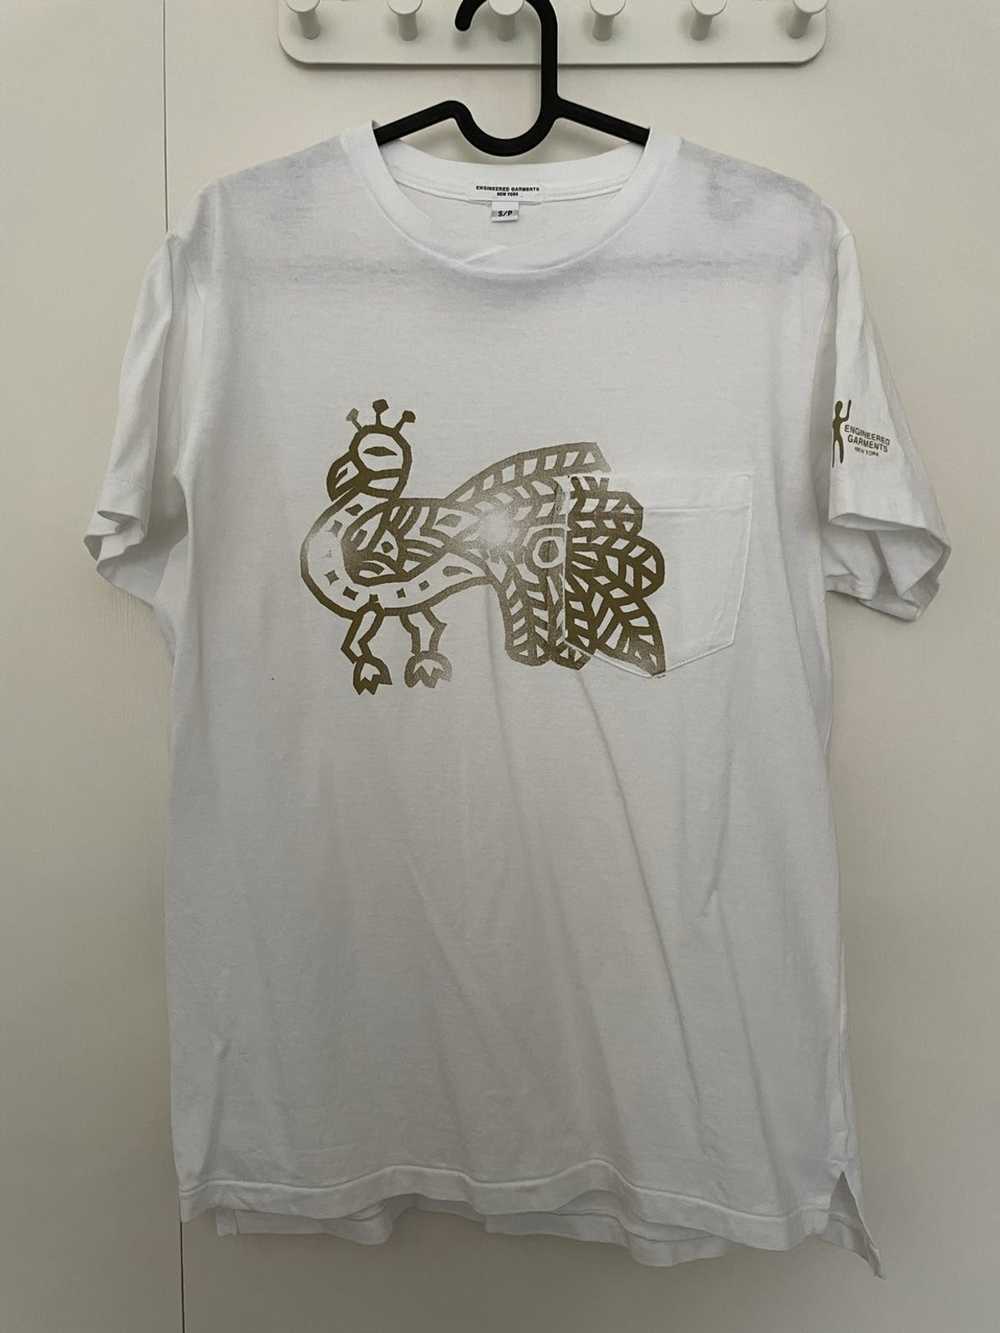 Engineered Garments SS15 Peacock T-Shirt - image 1